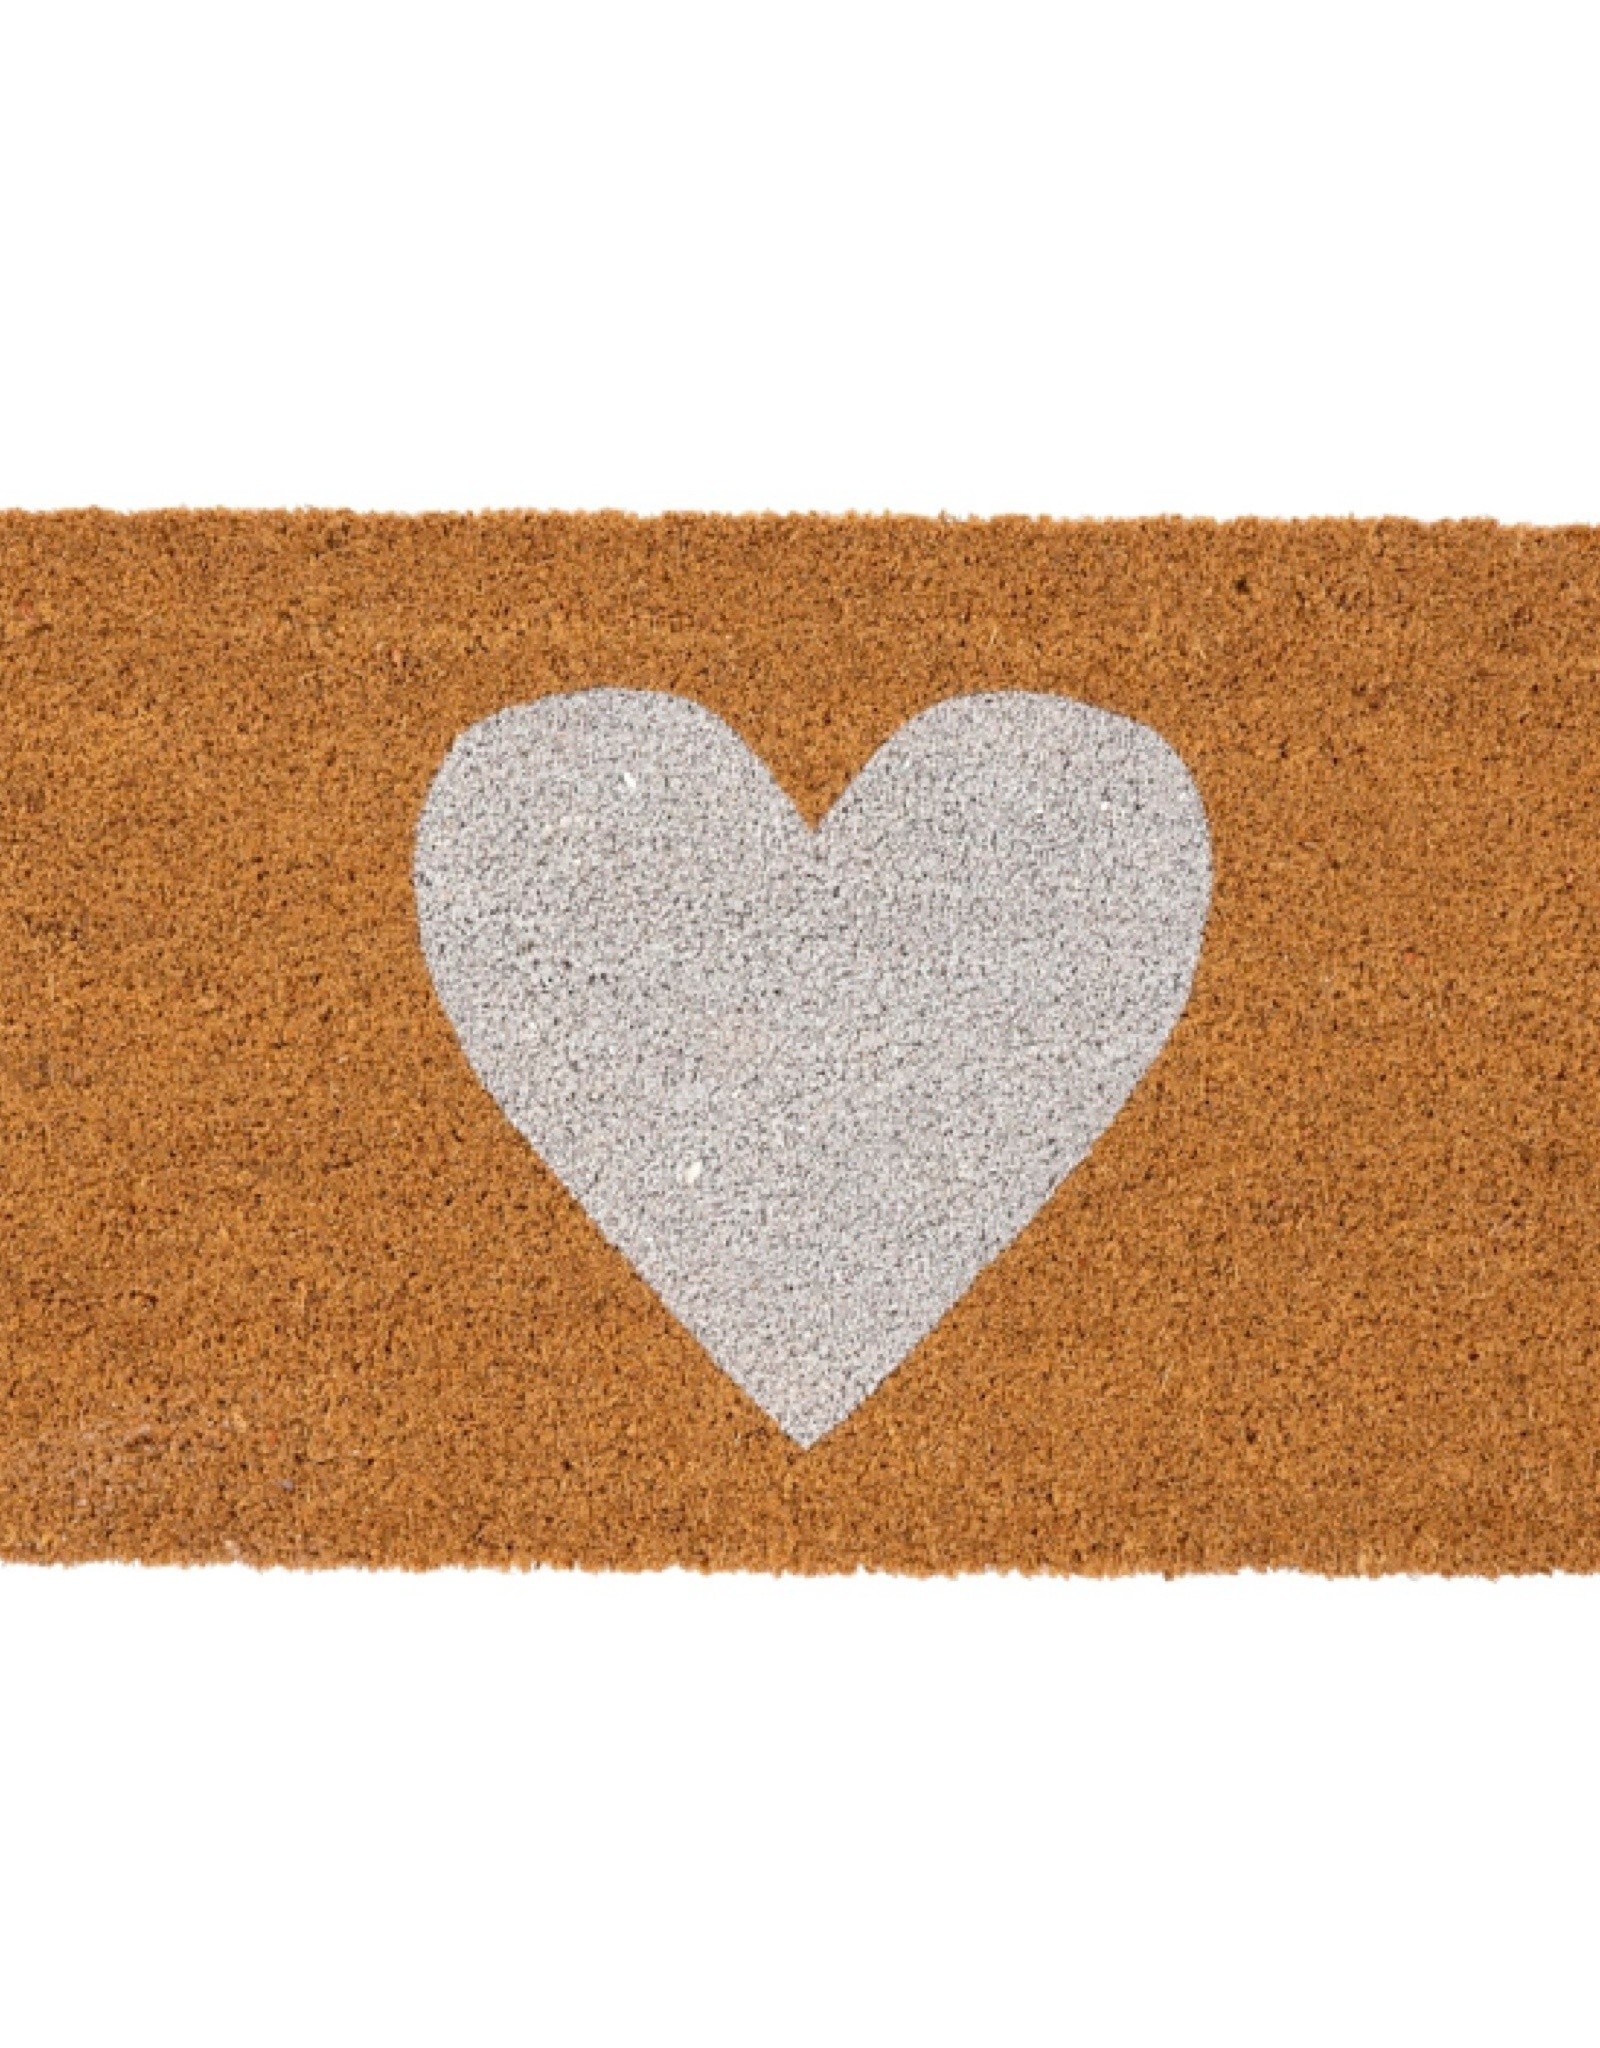 Indaba Doormat Indaba White Heart 1-5249